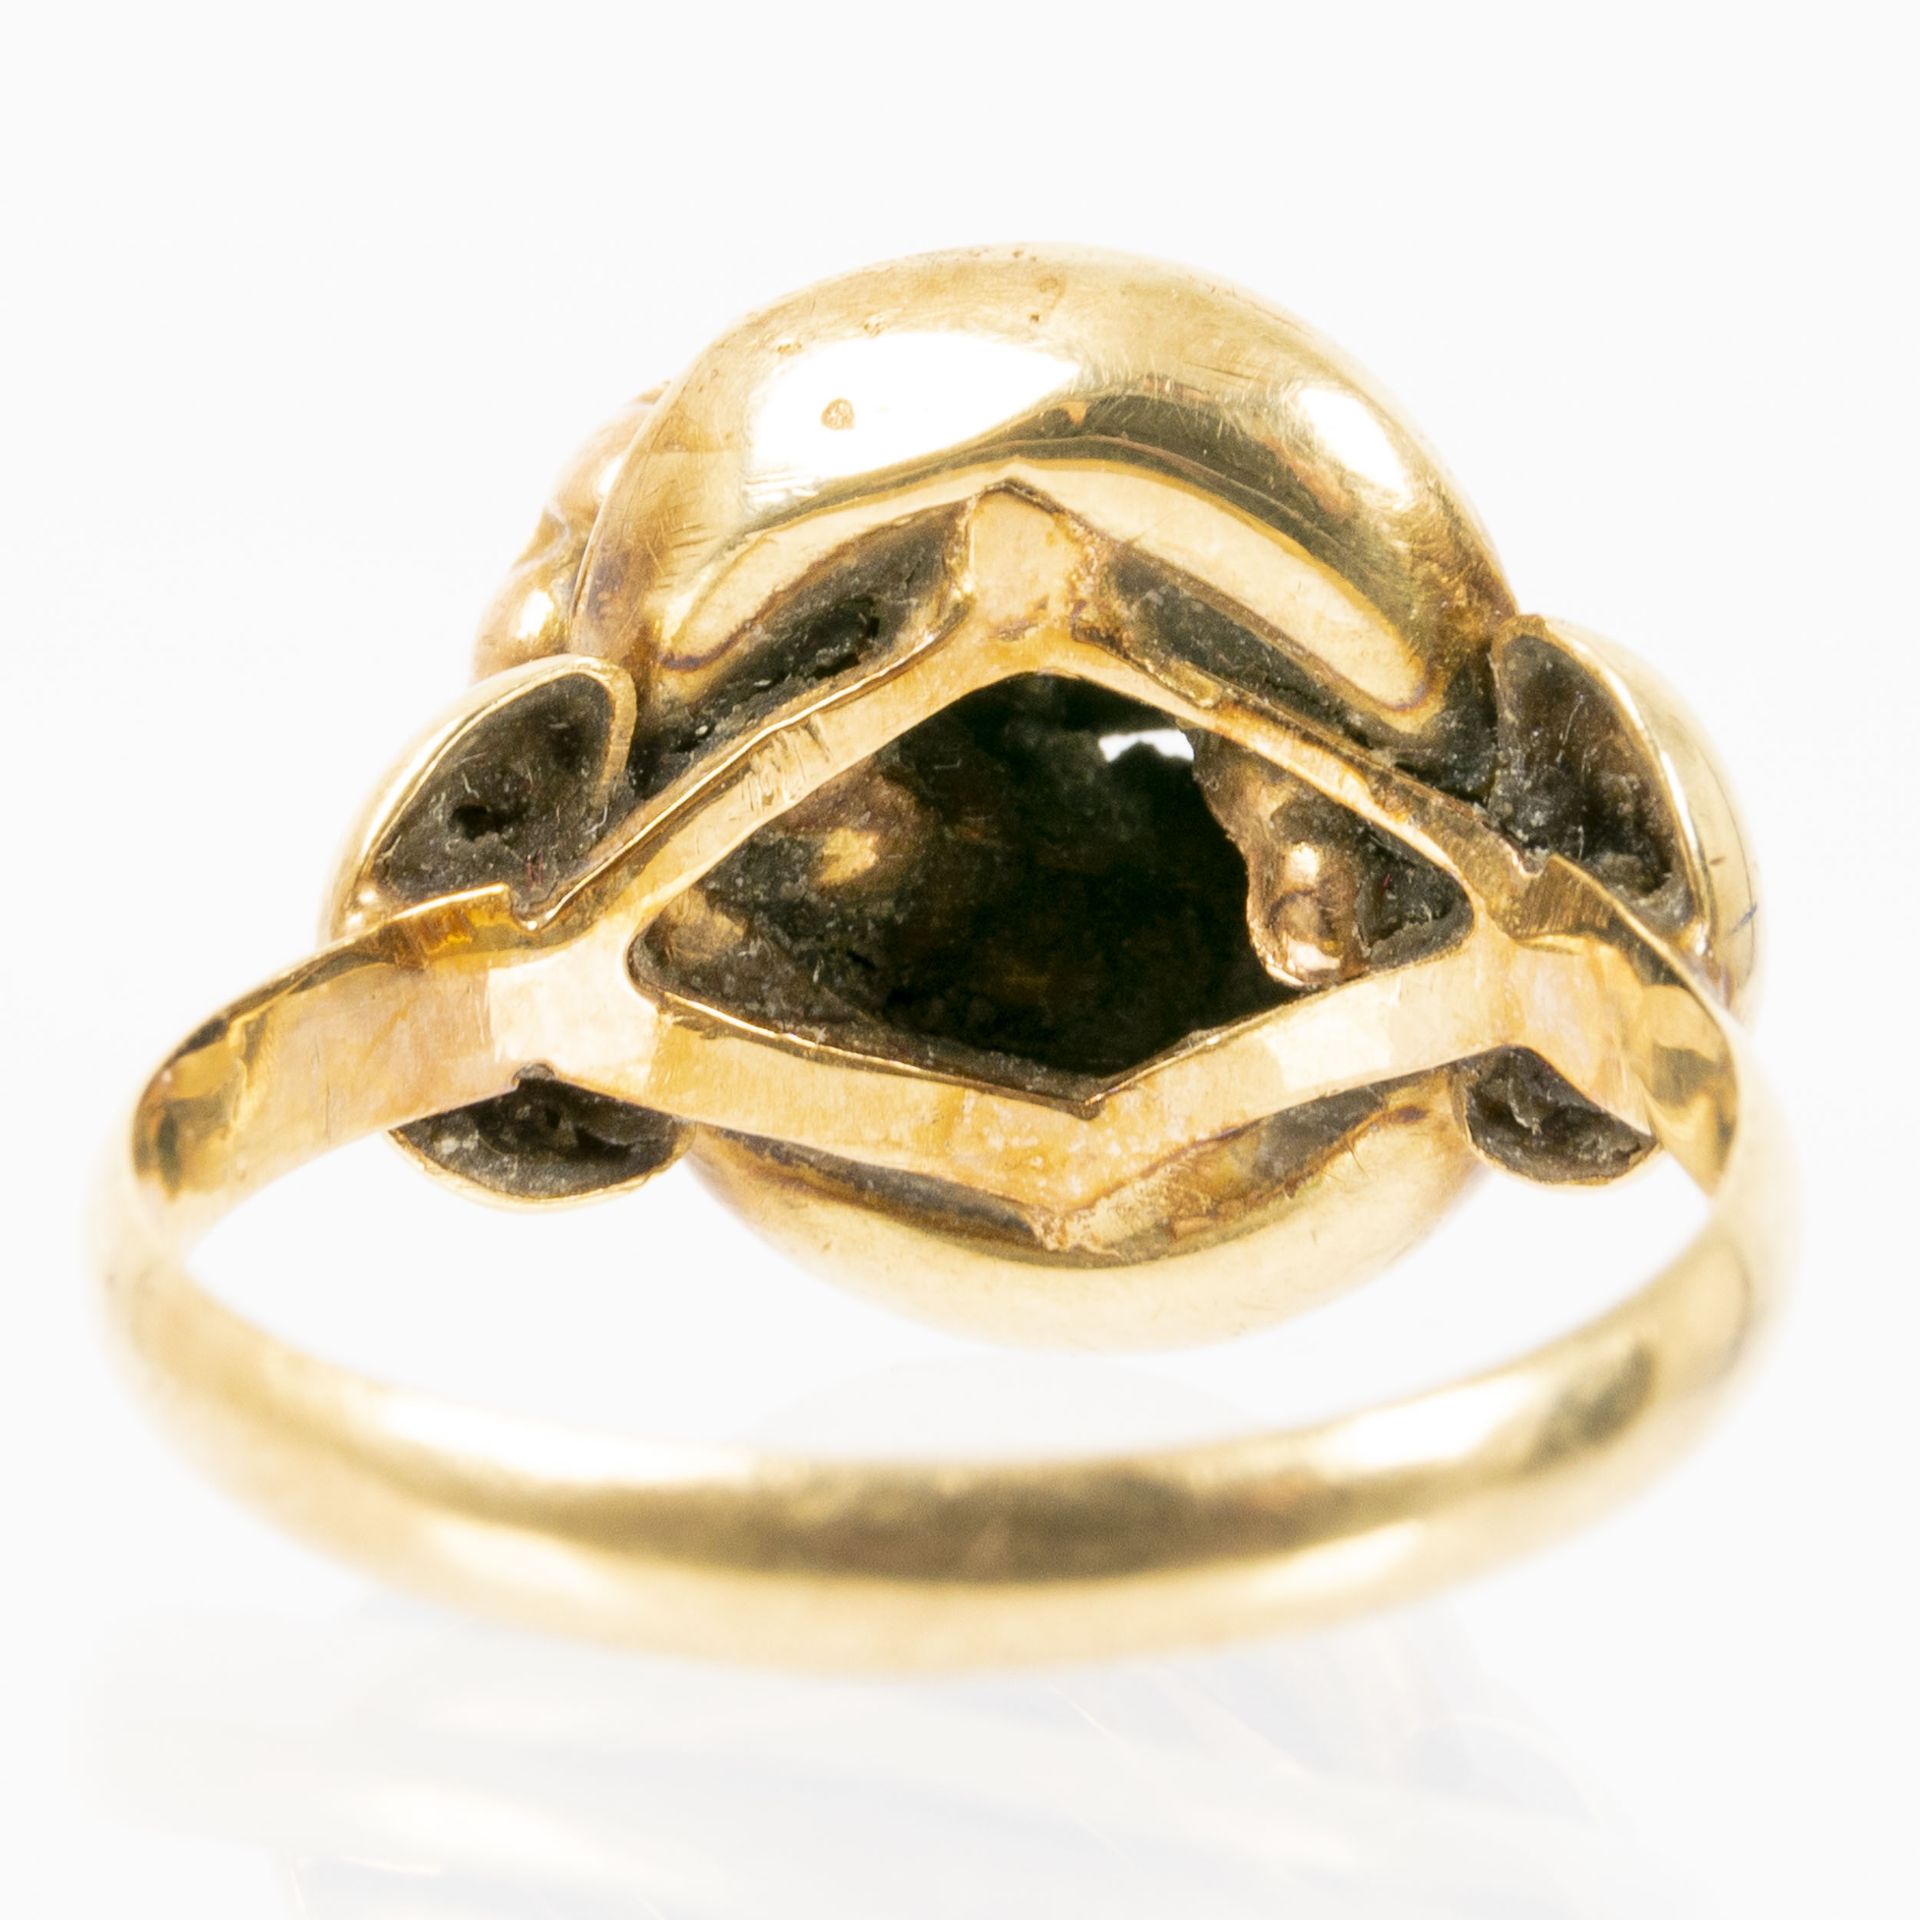 Alter 585er Gelbgold-Ring, an einen "Dutt" erinnernd, Innendurchmesser ca. 17 mm, ca. 5 gr. - Bild 4 aus 5